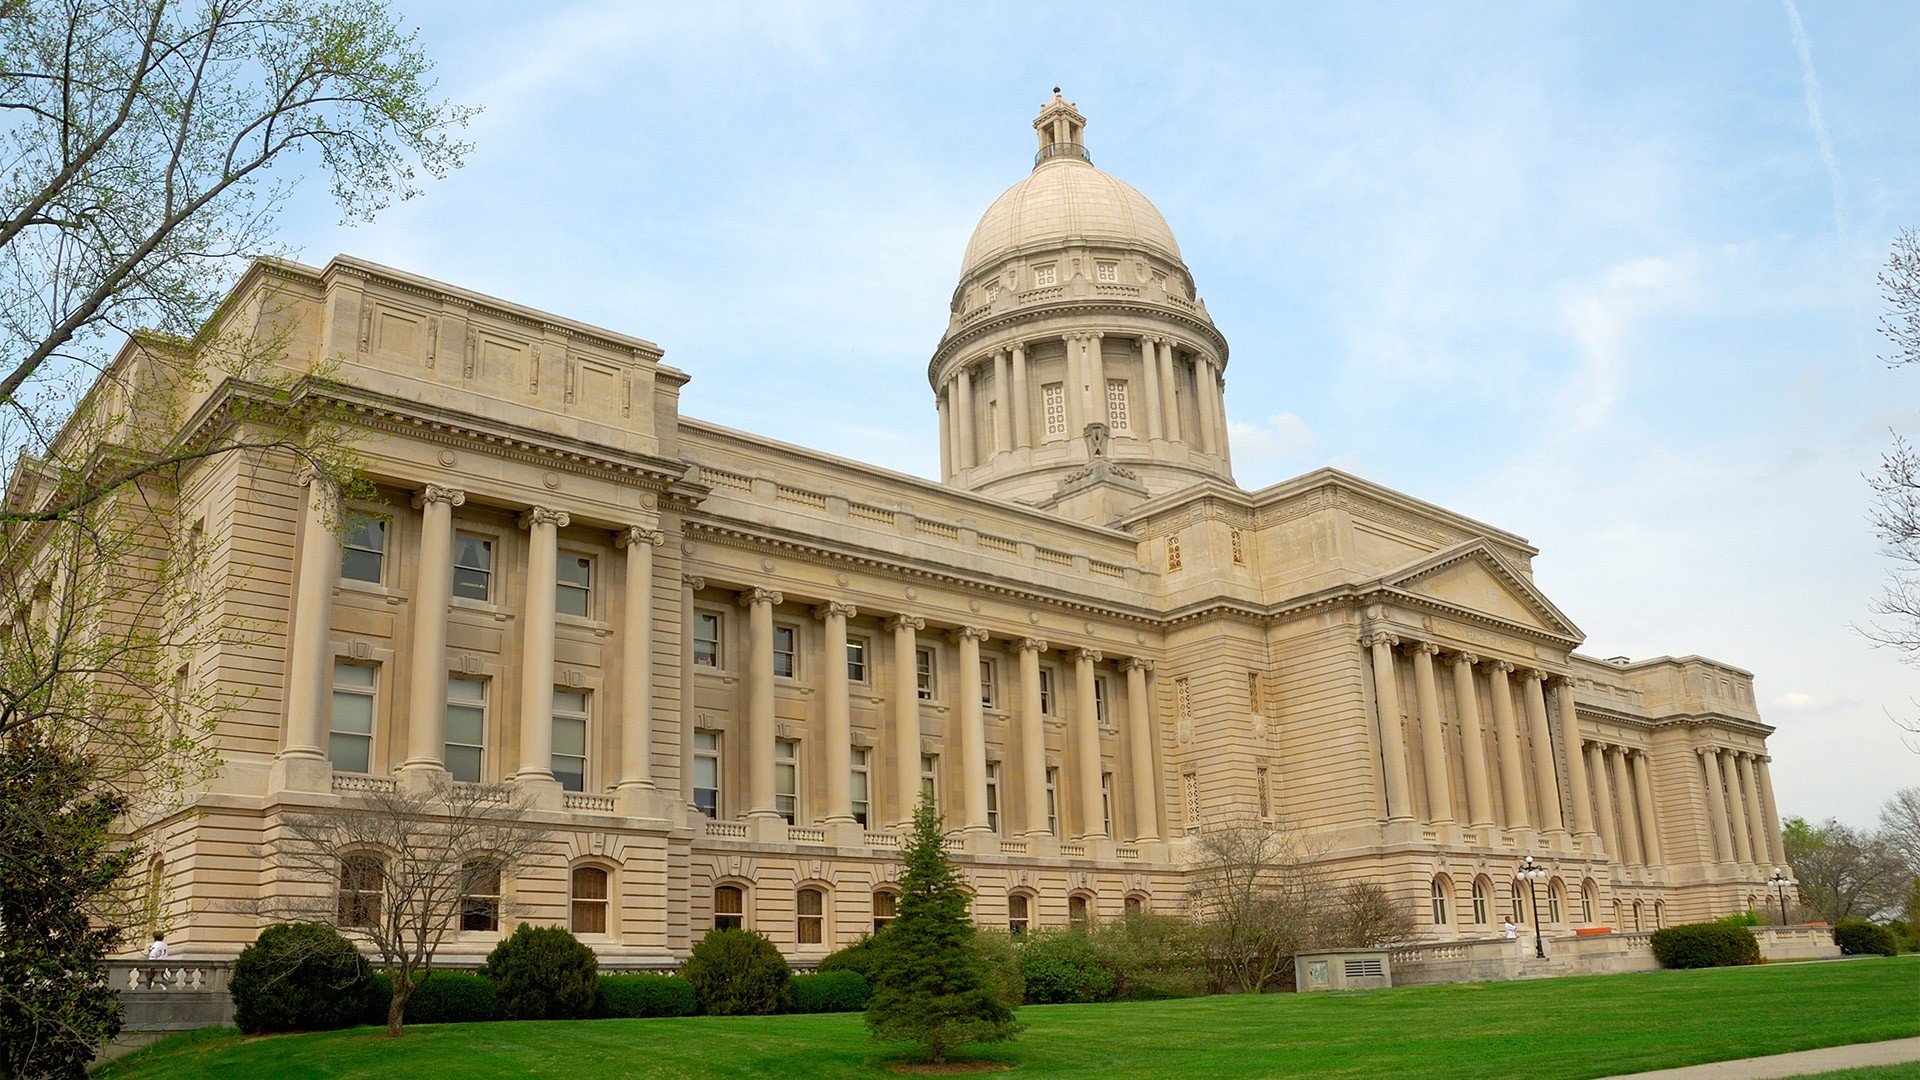 Anggota parlemen Kentucky memperkenalkan undang-undang baru untuk melegalkan taruhan olahraga, poker online